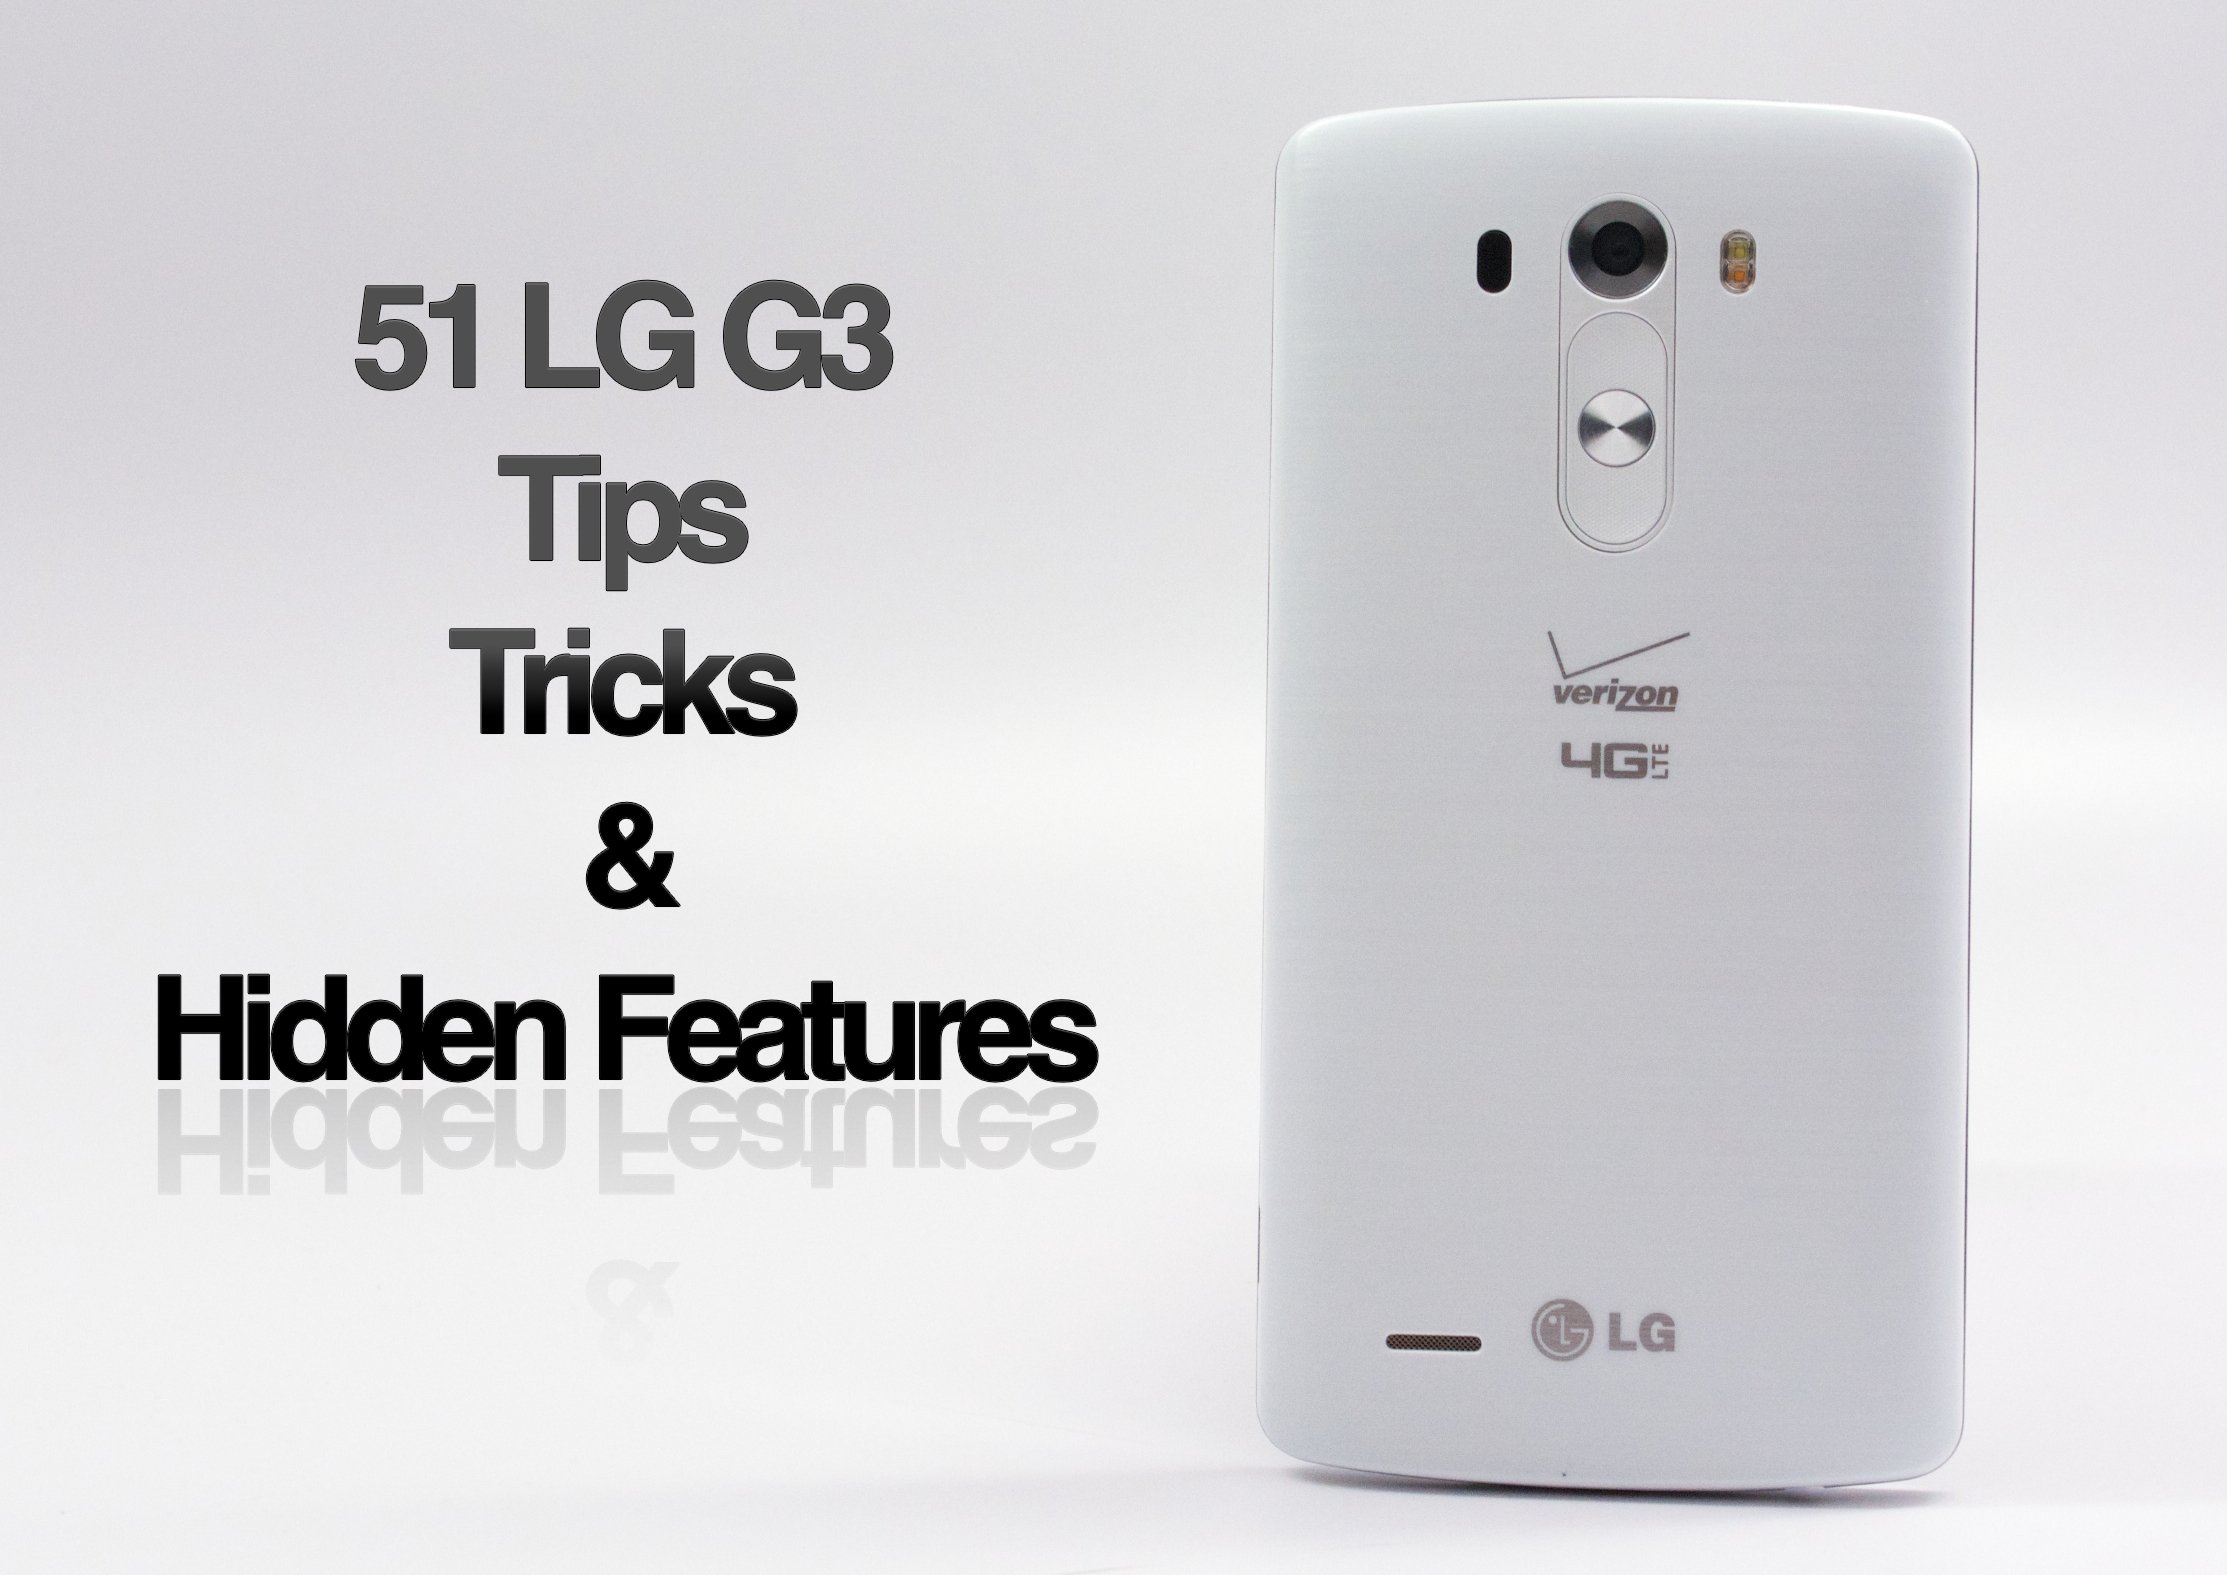 Kanon Gasvormig Wissen 51 LG G3 Tips, Tricks & Hidden Features